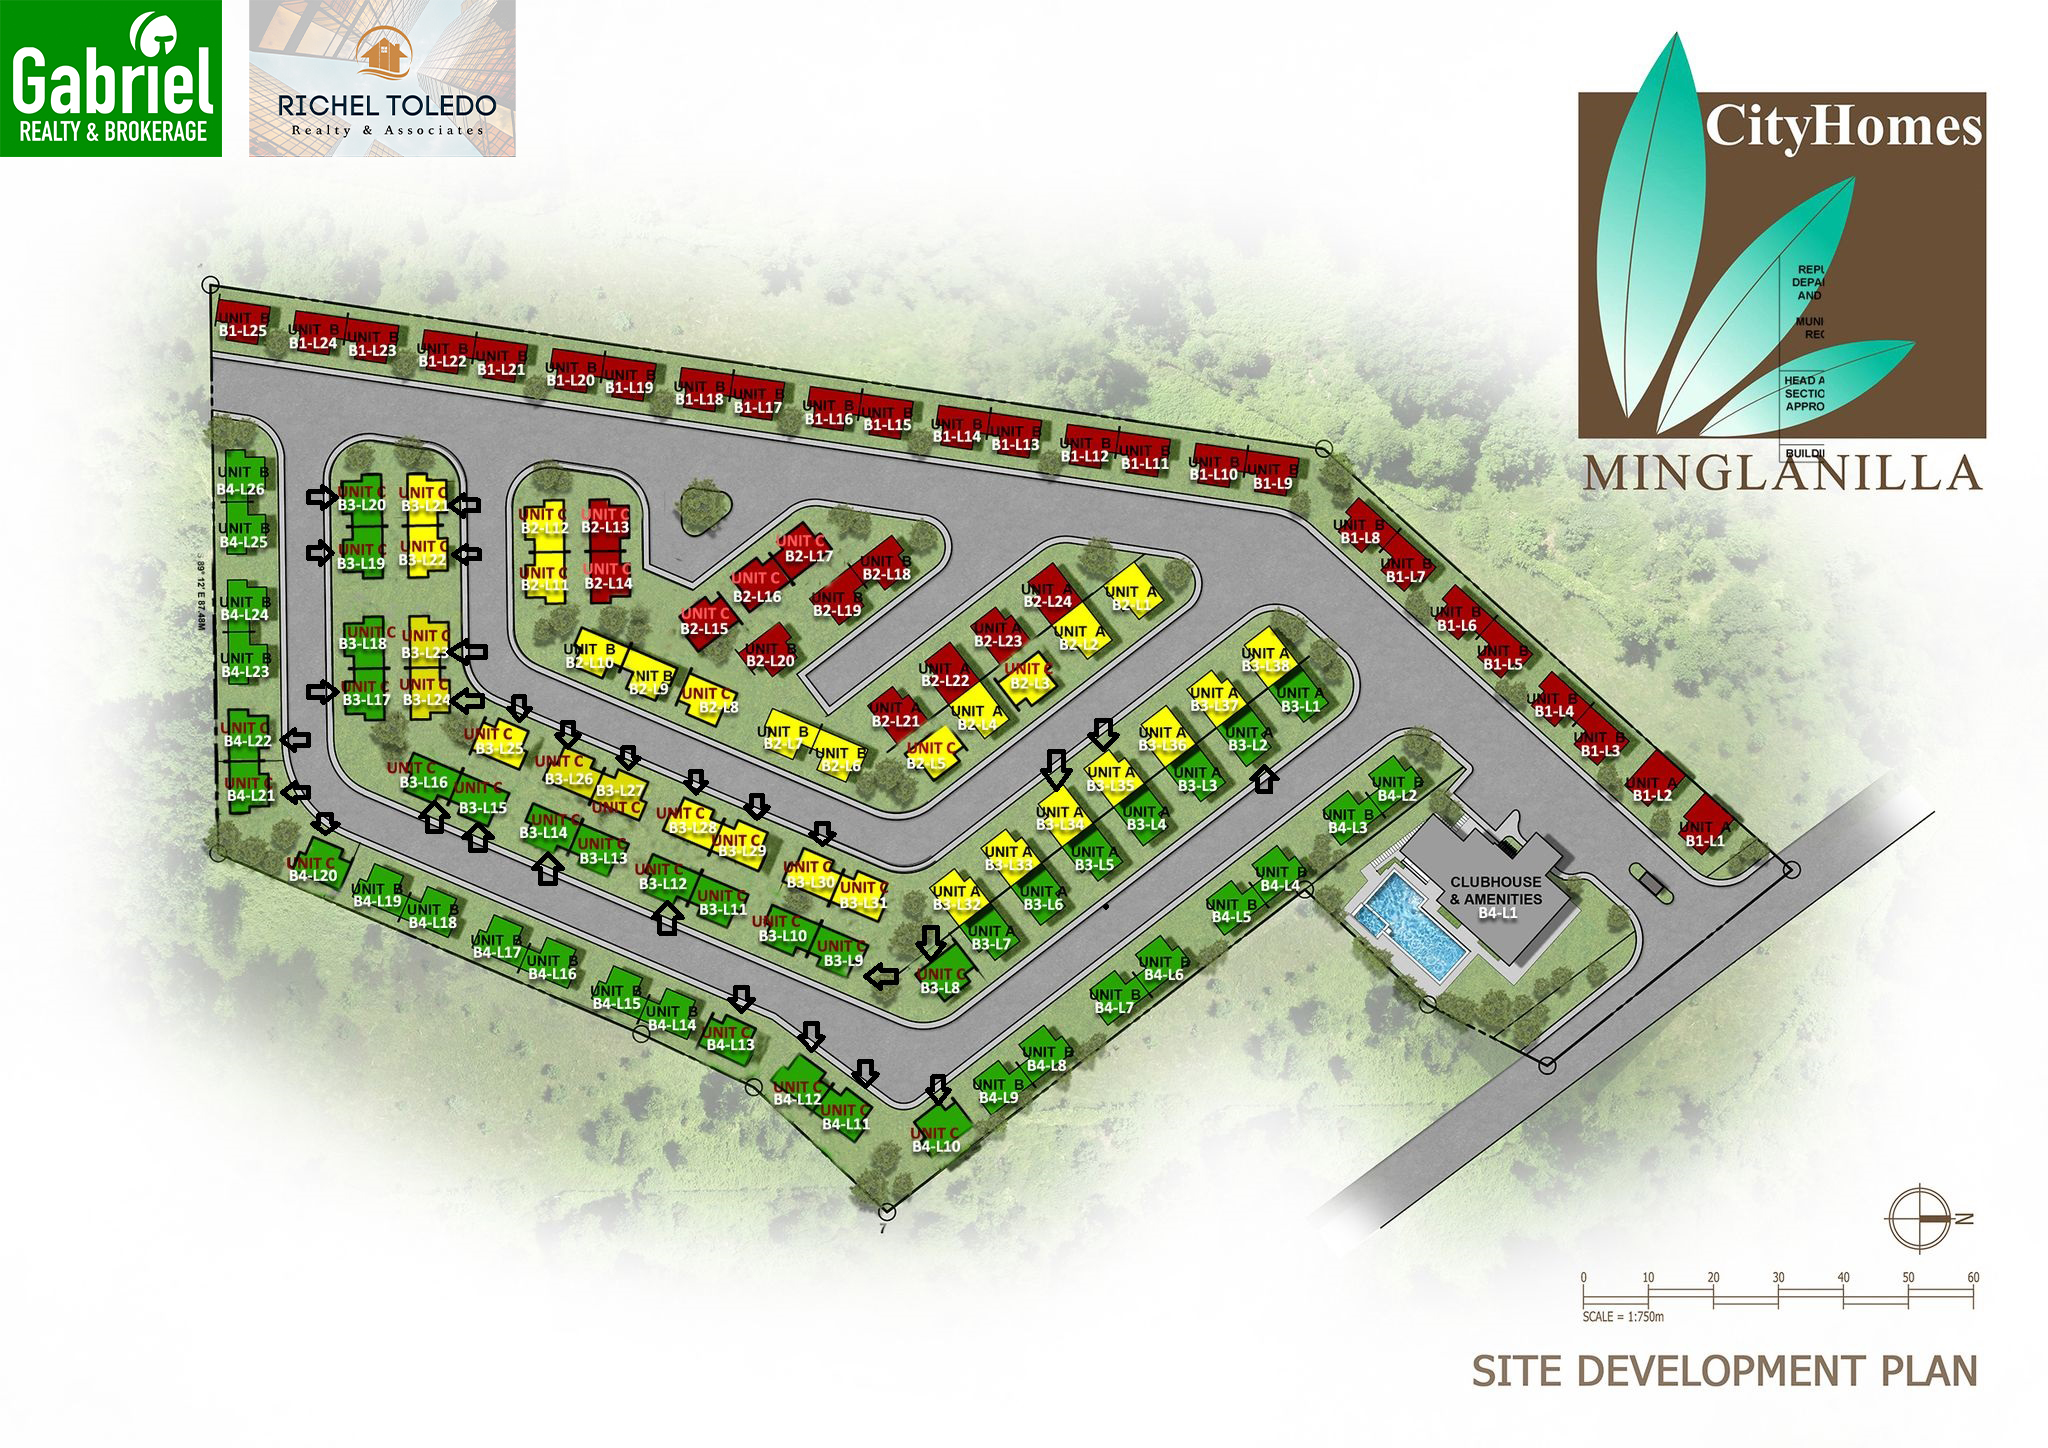 City Homes Minglanilla Site Development Plan